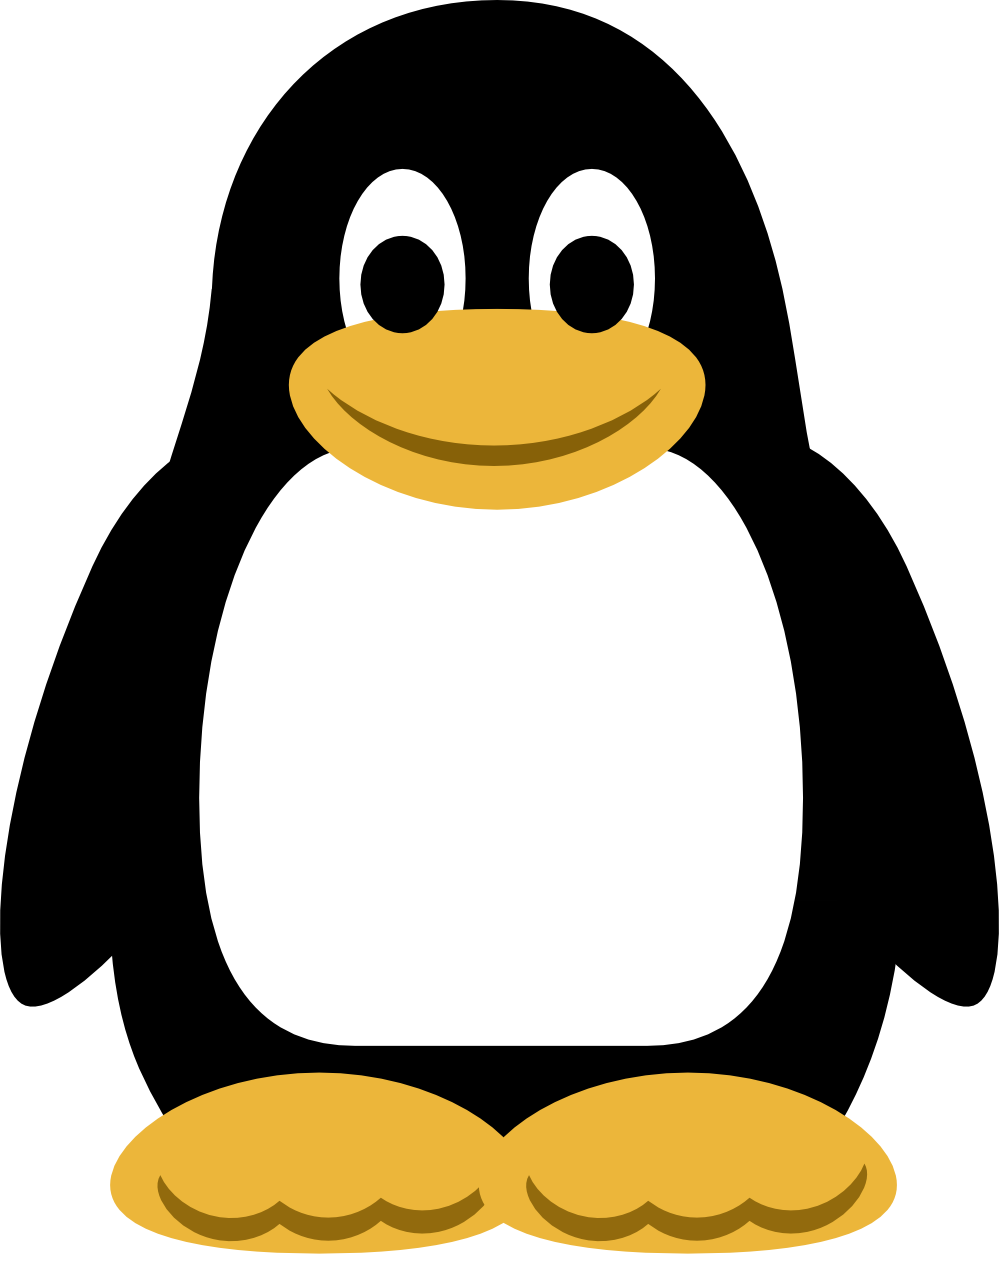 Penguin Cartoon png download - 602*599 - Free Transparent Club Penguin png  Download. - CleanPNG / KissPNG